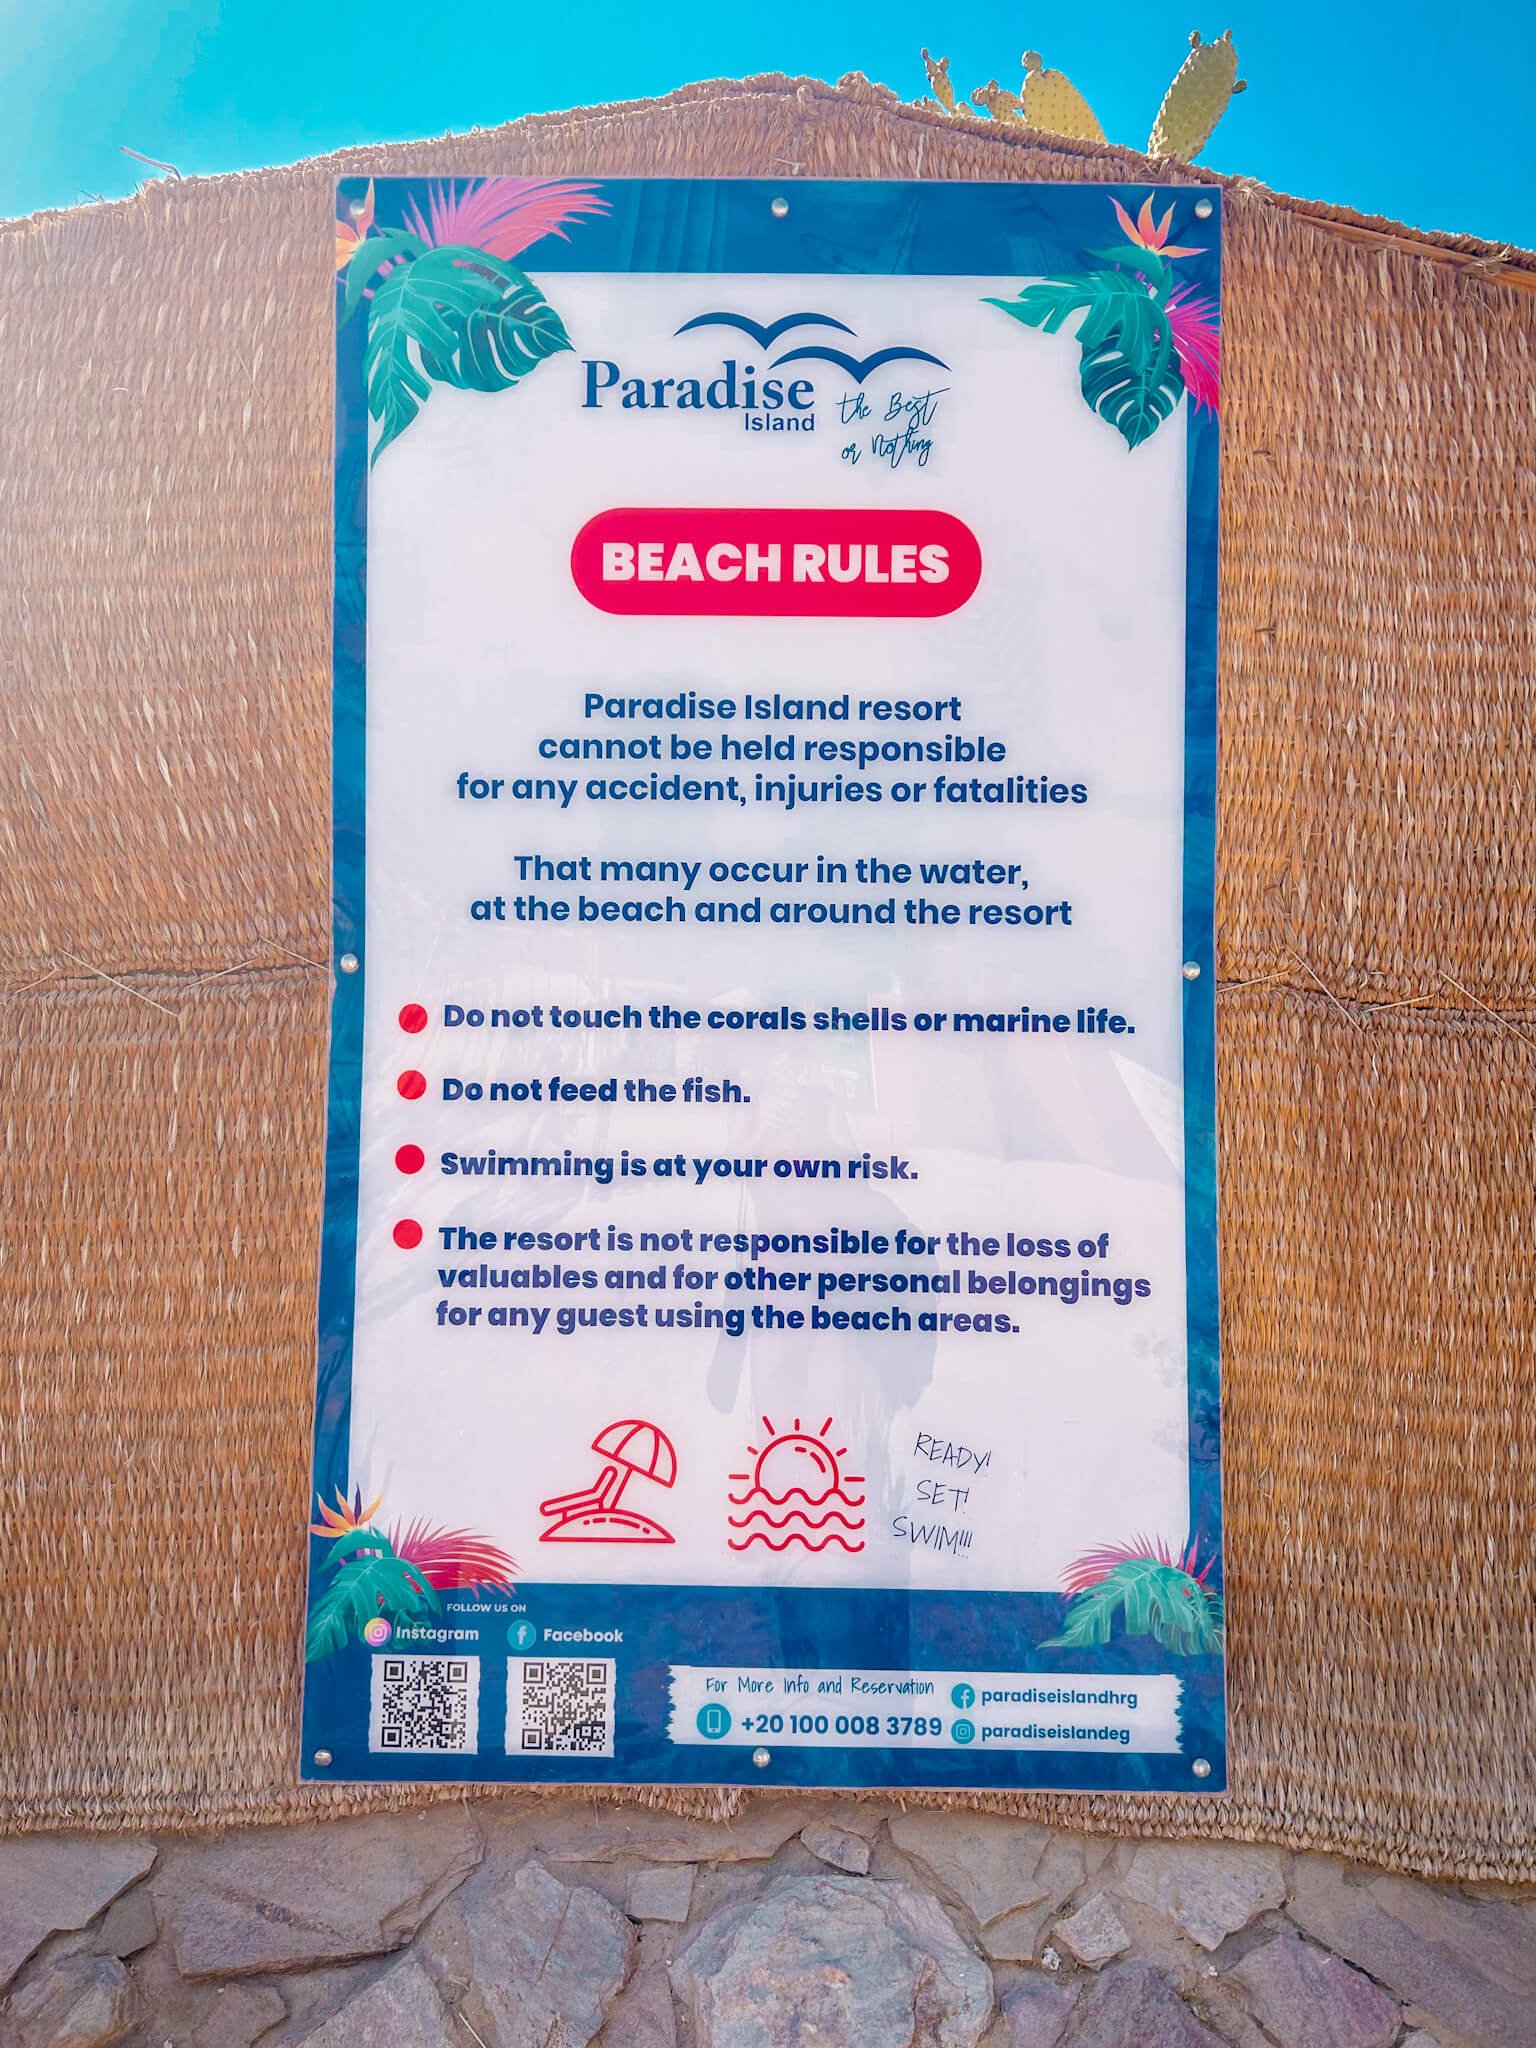 Beach rules for Paradise Island